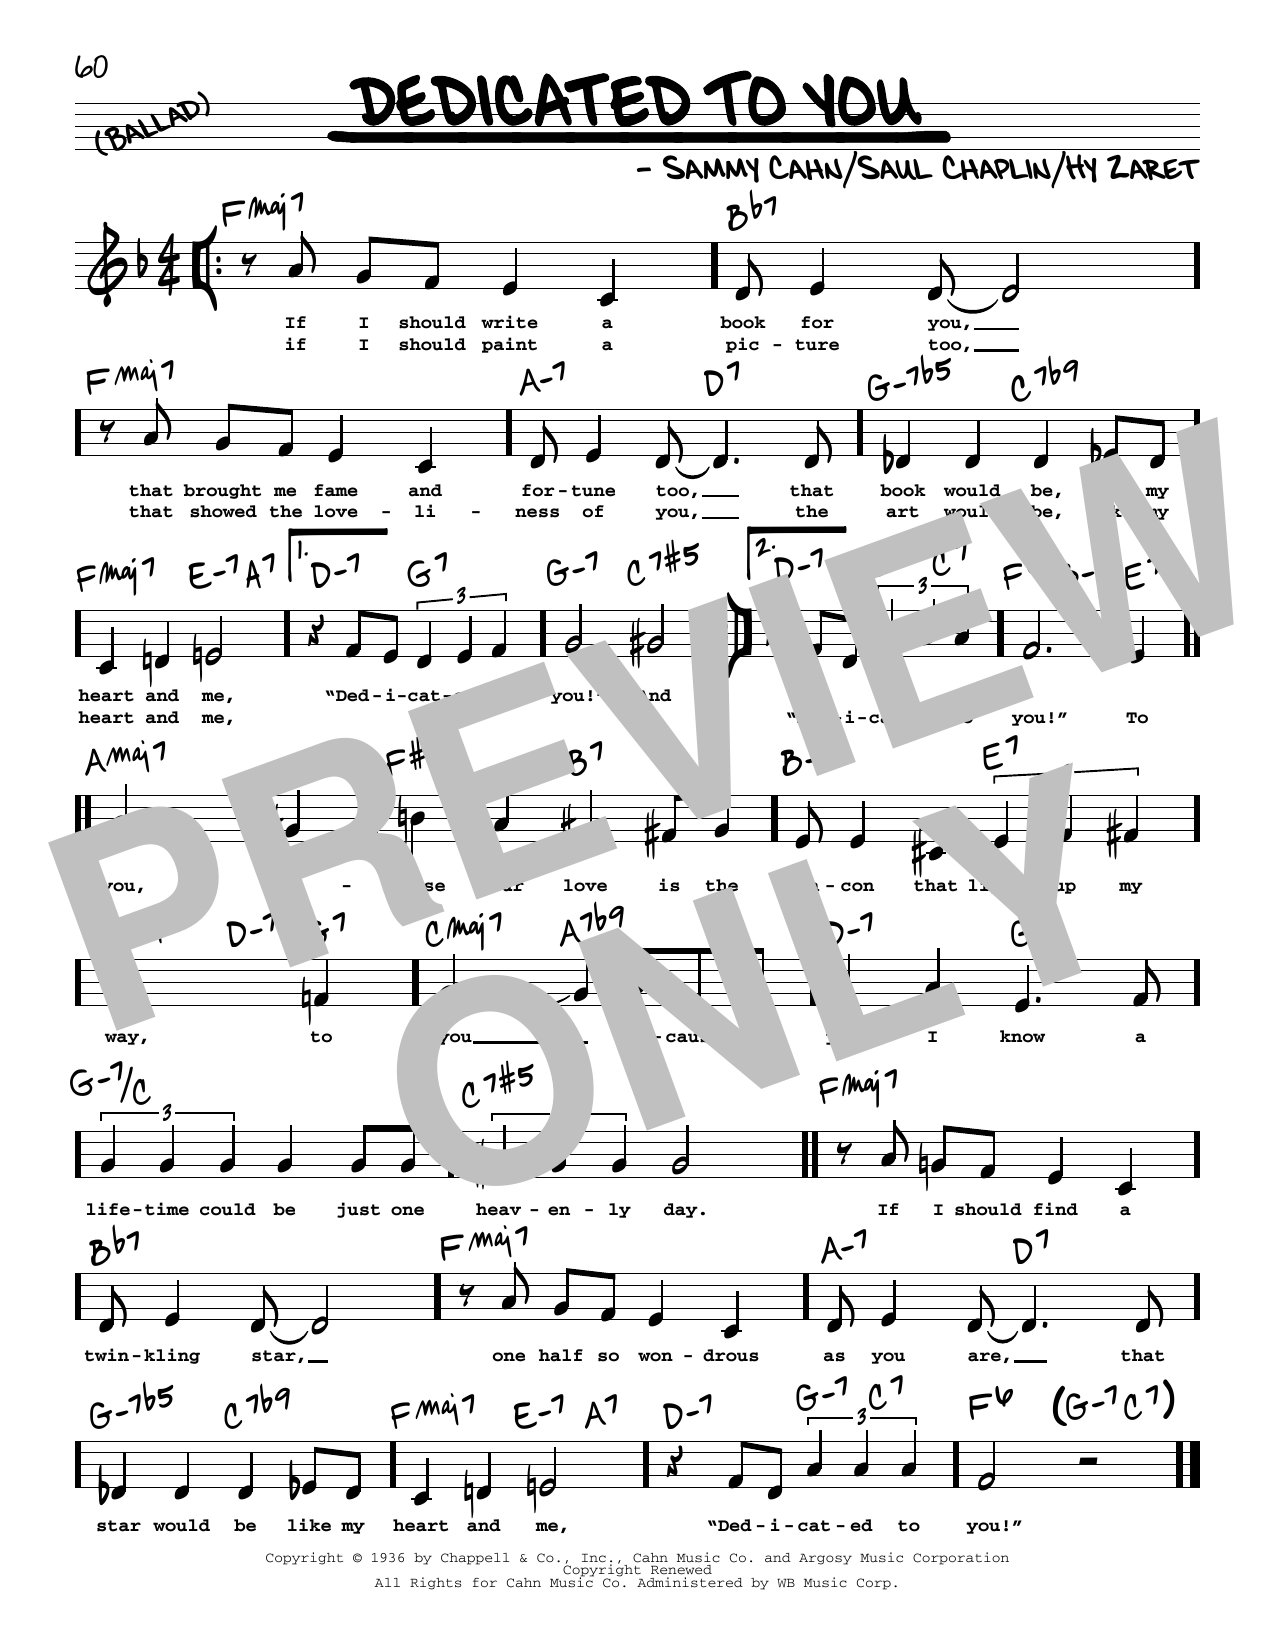 Sammy Cahn Dedicated To You (Low Voice) sheet music notes printable PDF score